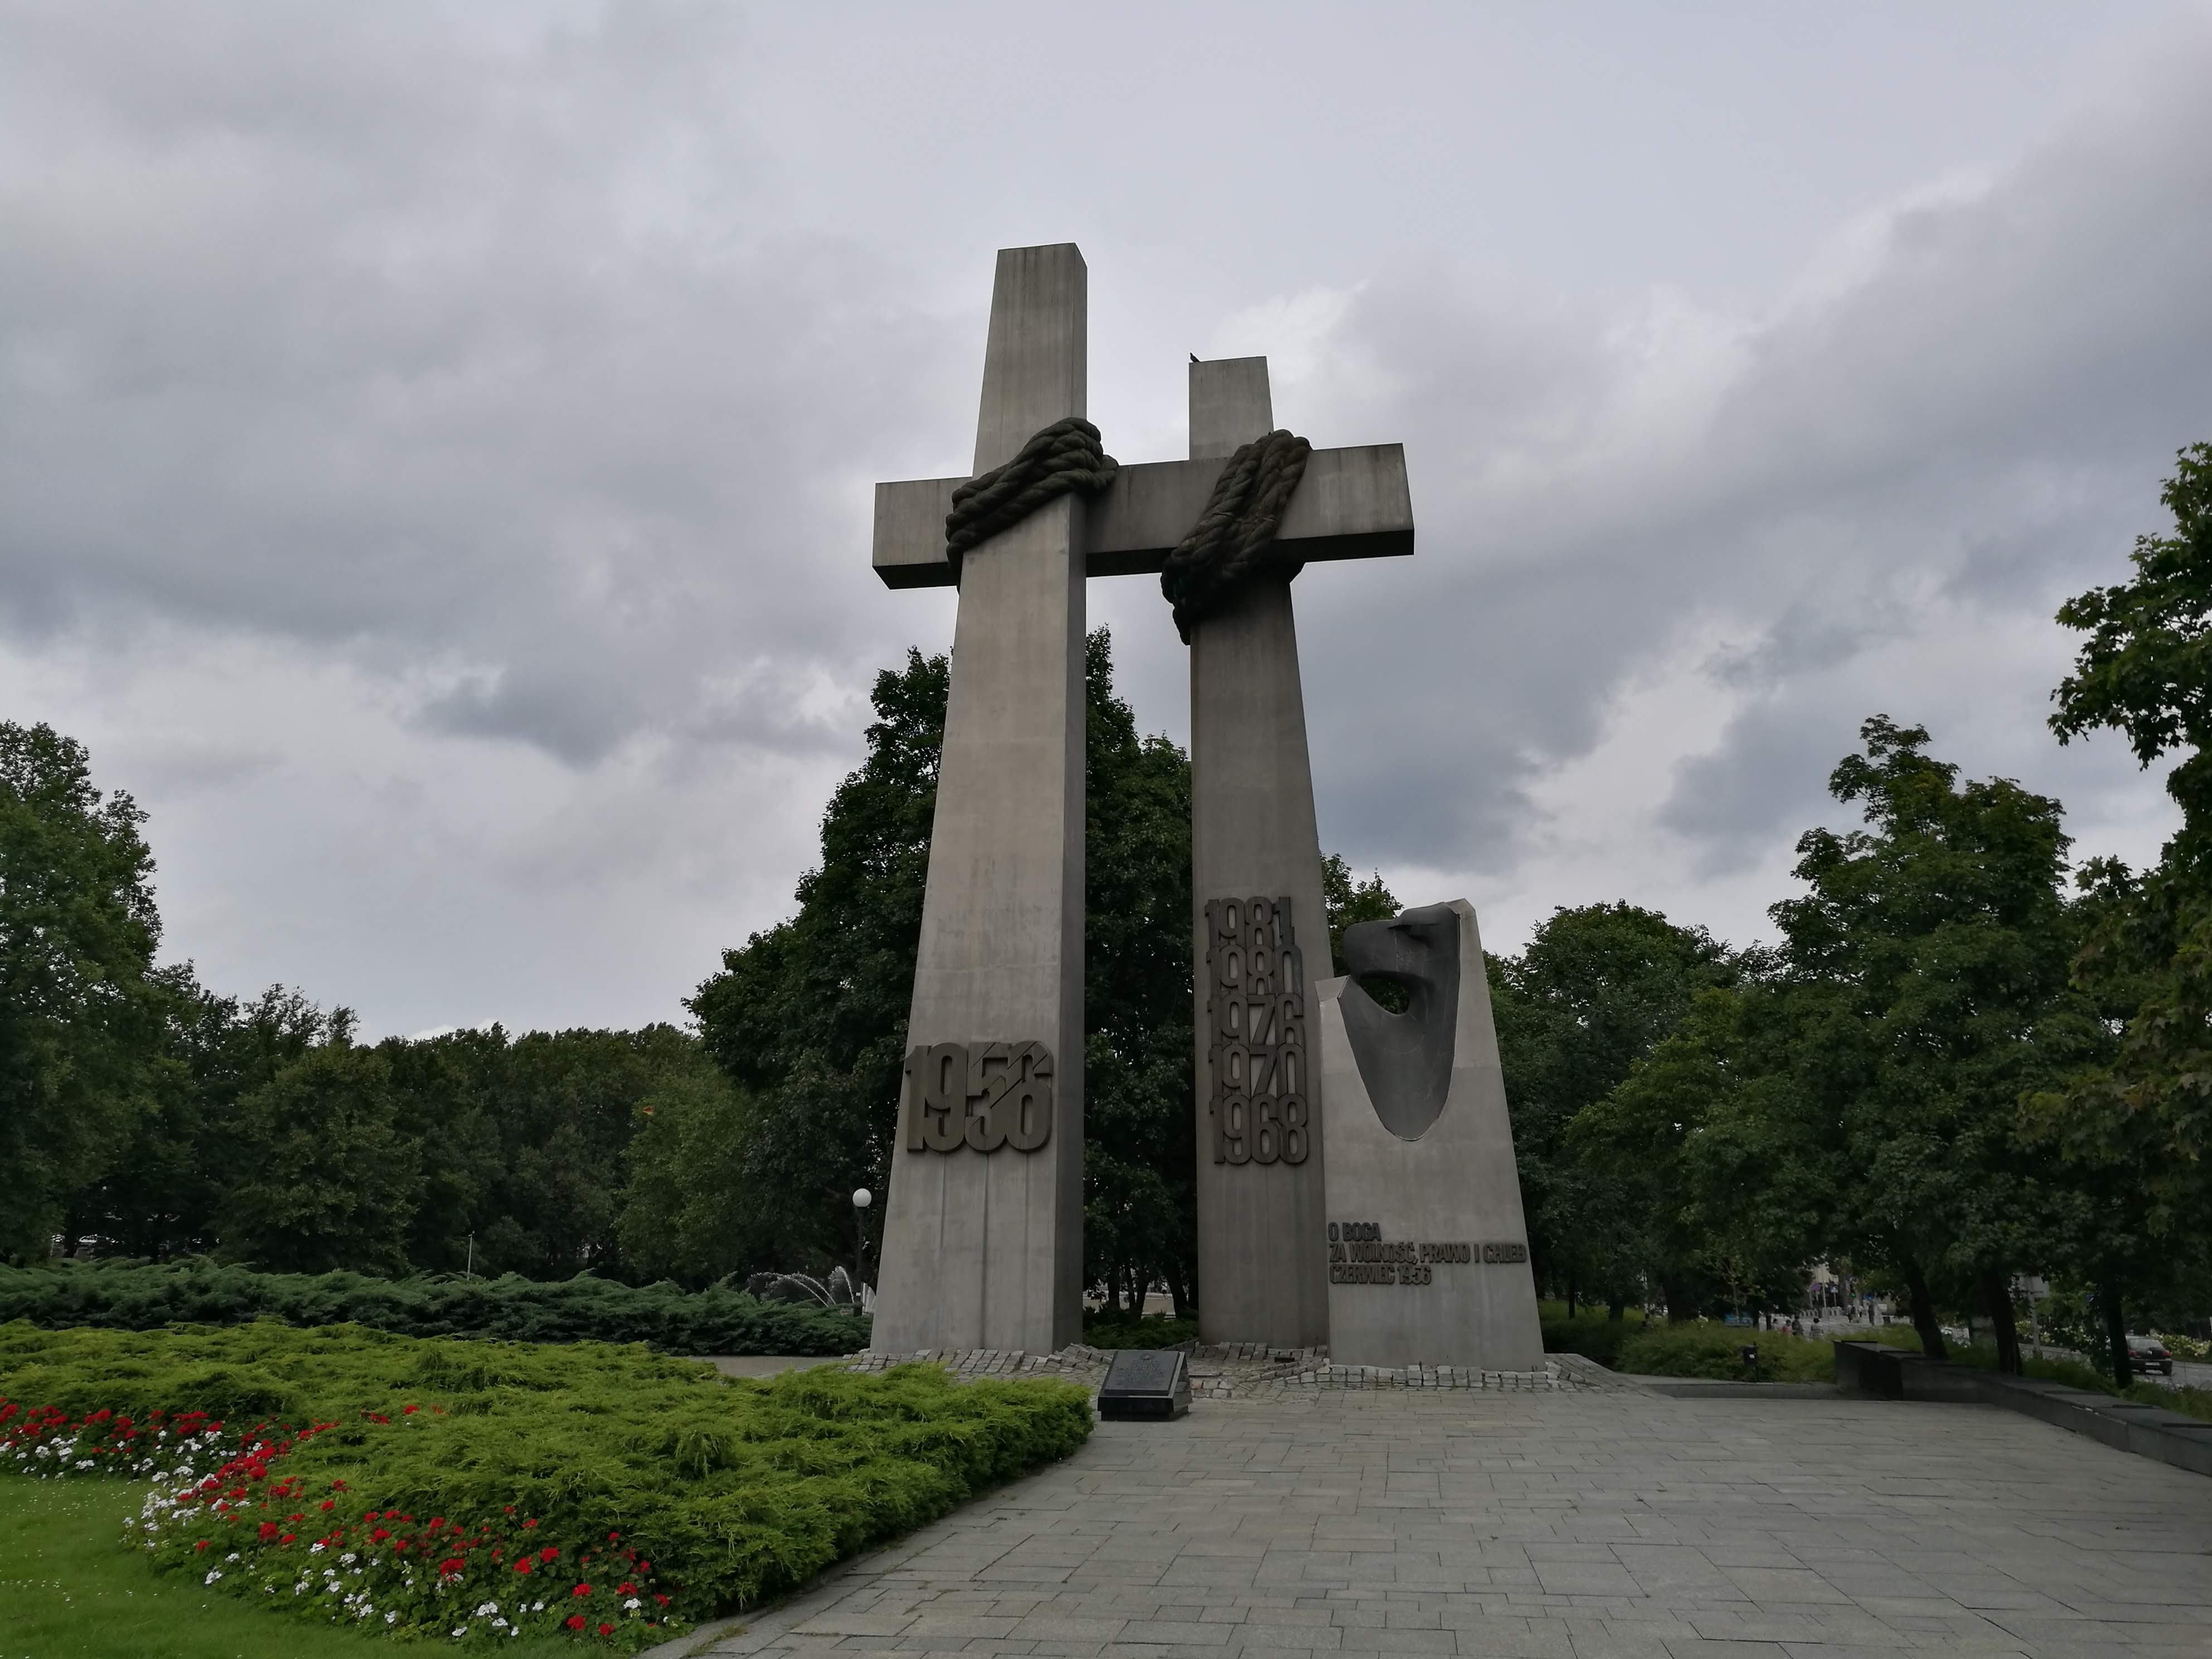 Polish concrete crucifix